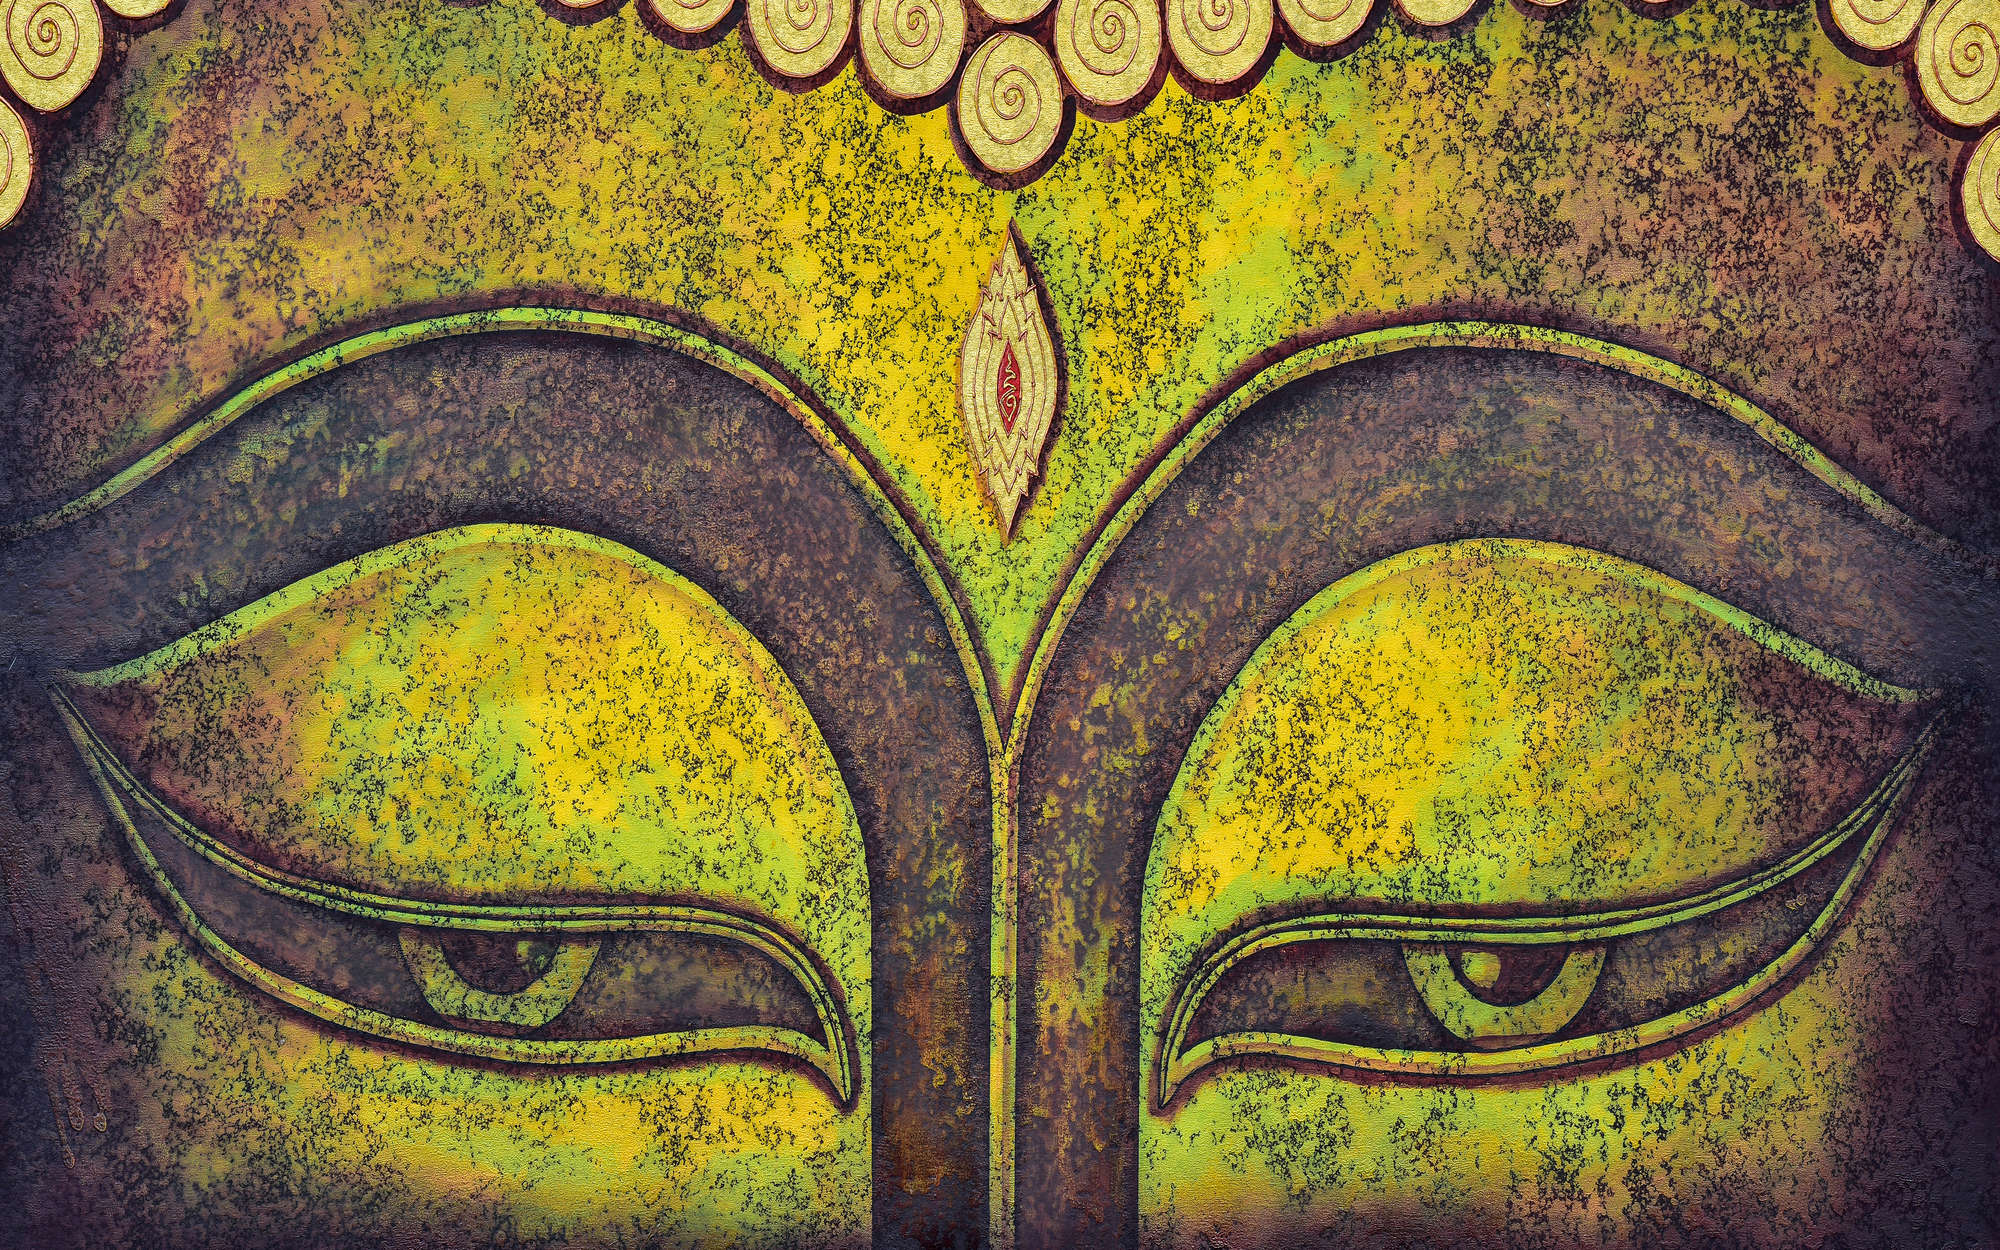             Detalle mural de la cara de Buda - Premium Smooth Nonwoven
        